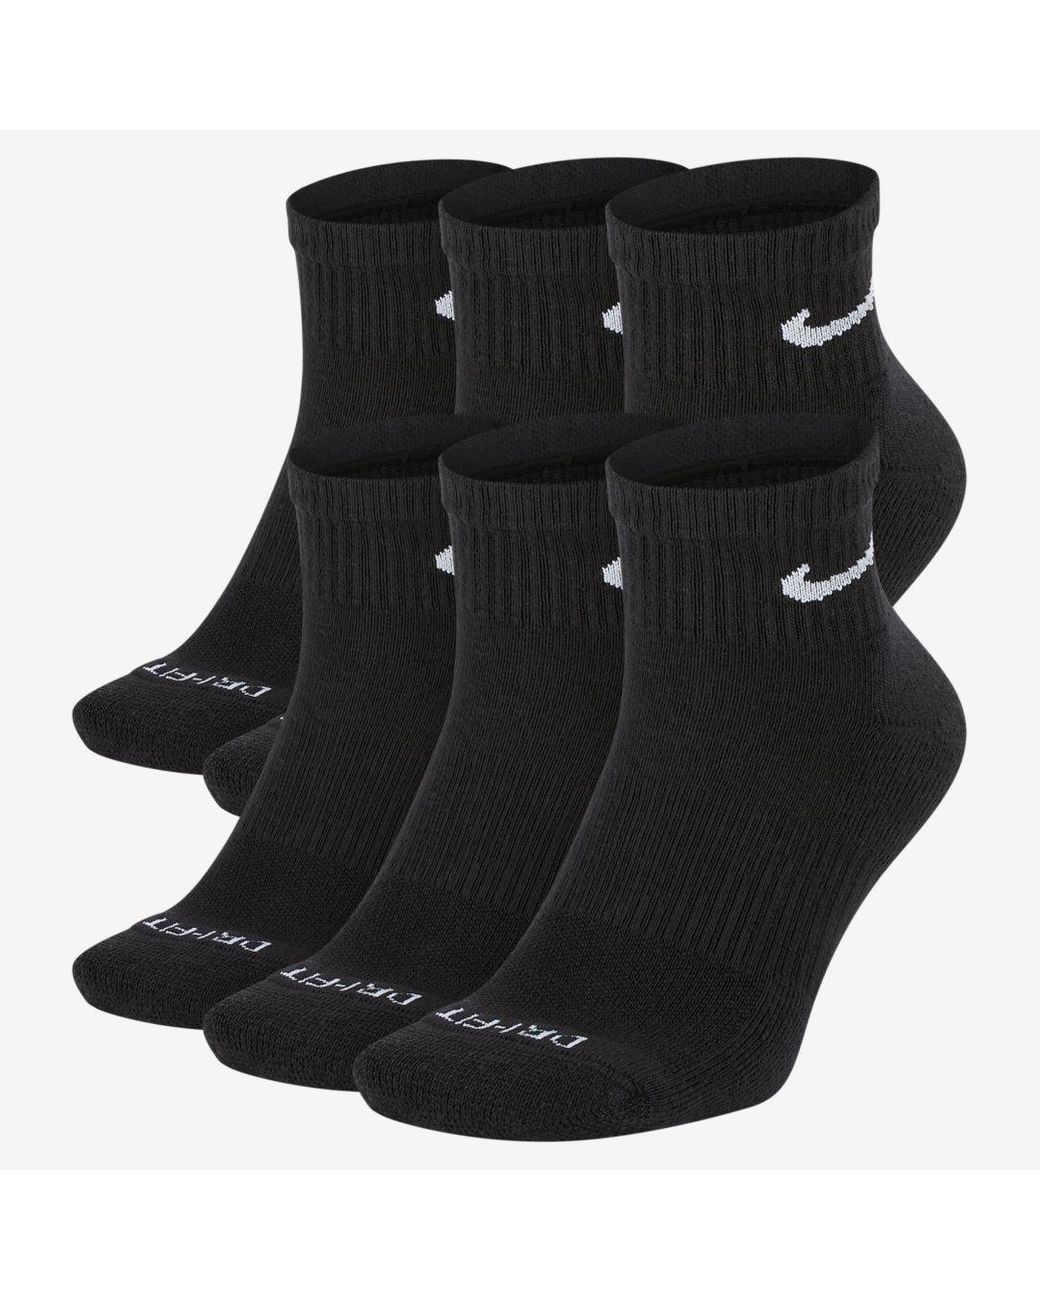 Nike Everyday Plus Cushioned Training Ankle Socks in Black,White (Black ...